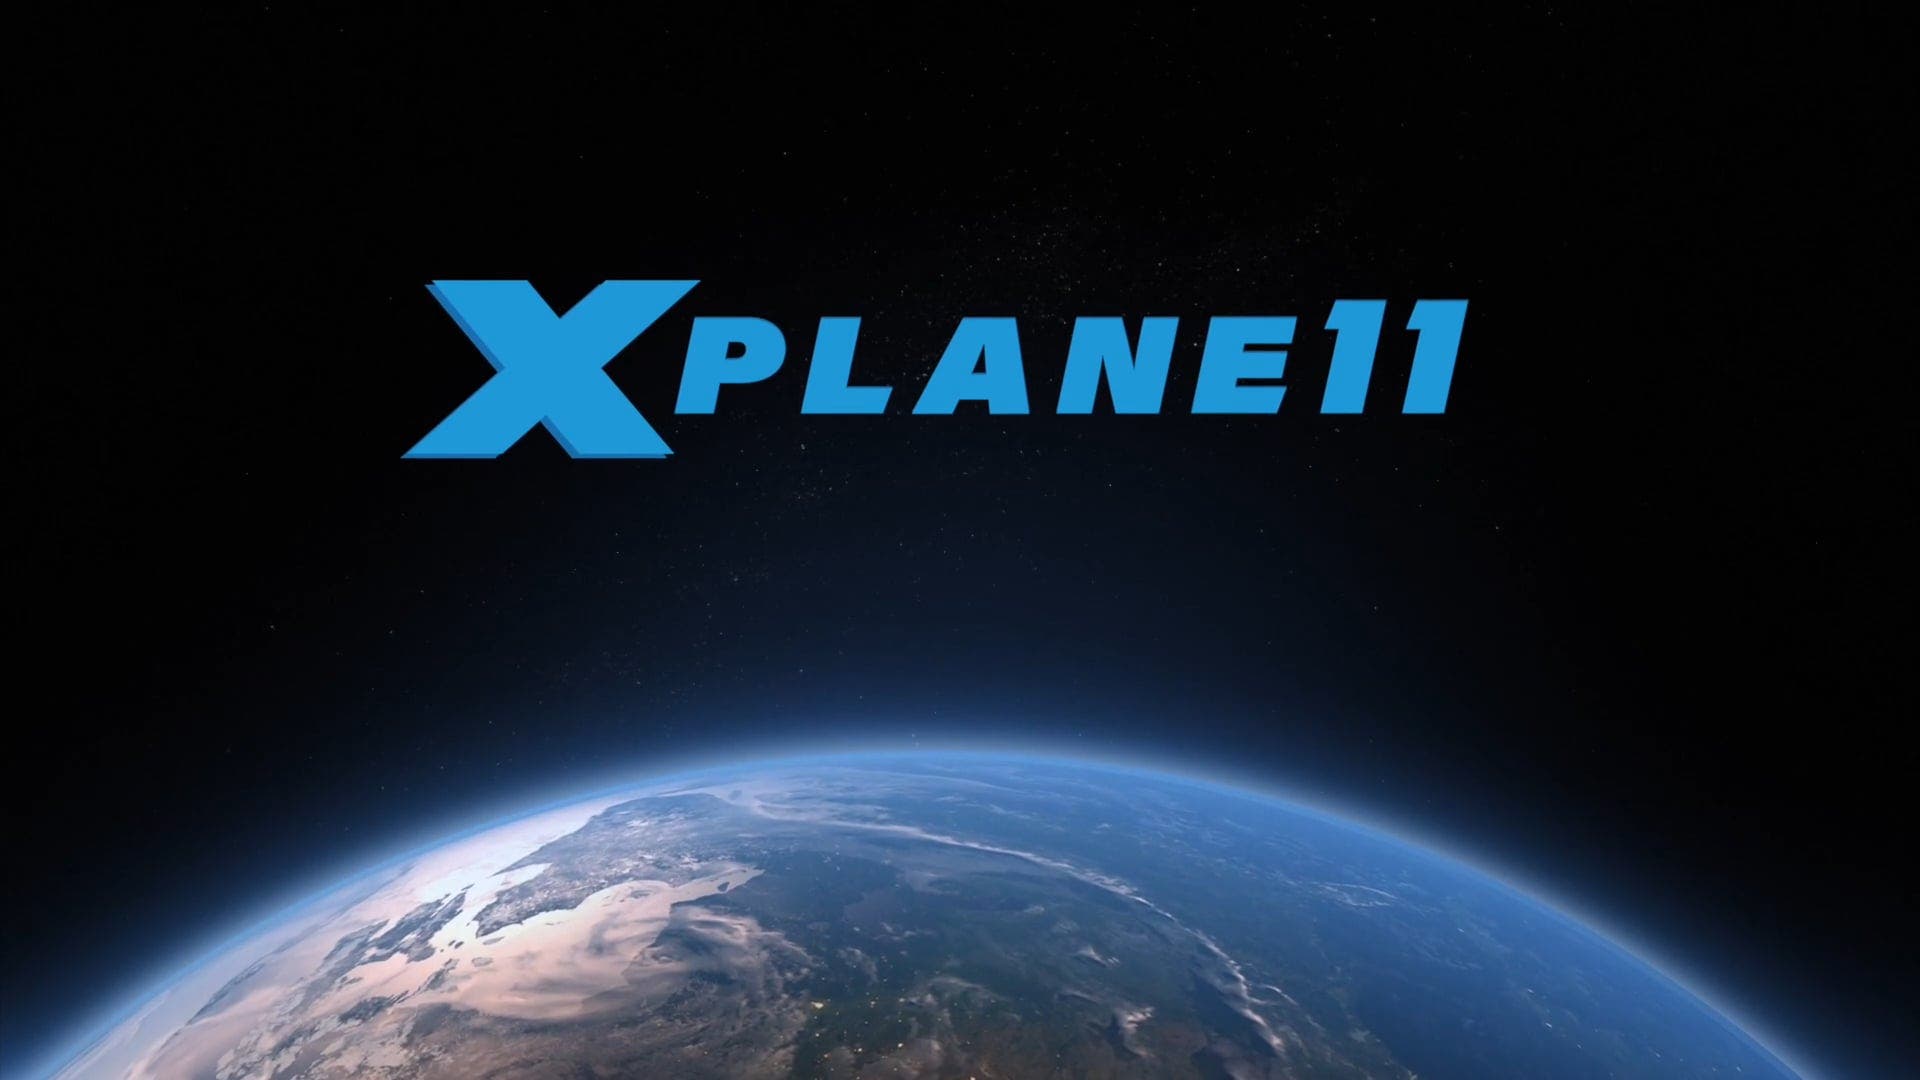 x plane 11 announcement video